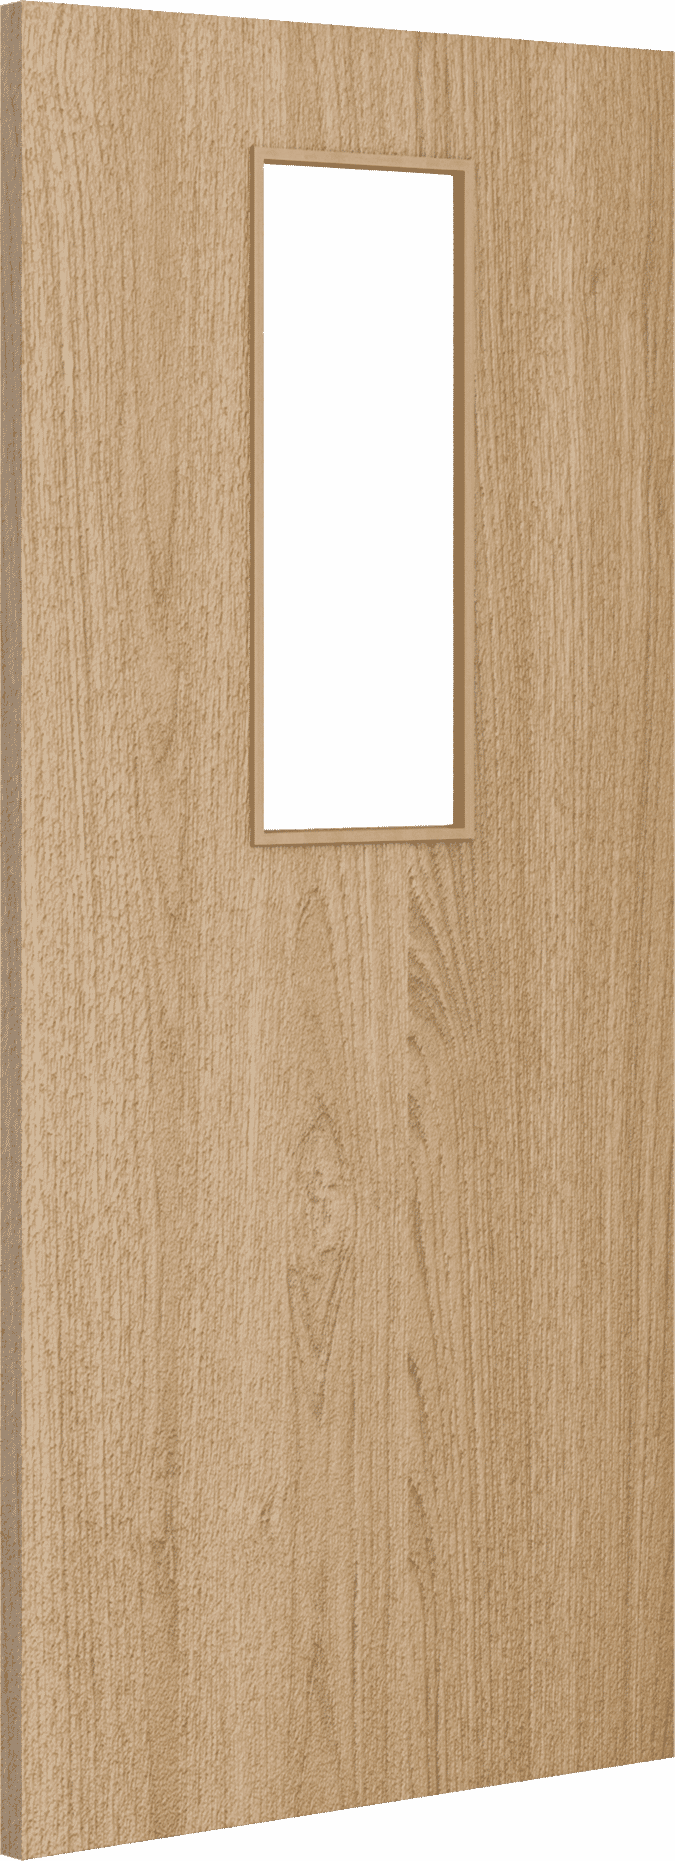 2040mm x 526mm x 44mm Architectural Oak 14 Frosted Glazed - Prefinished FD30 Fire Door Blank